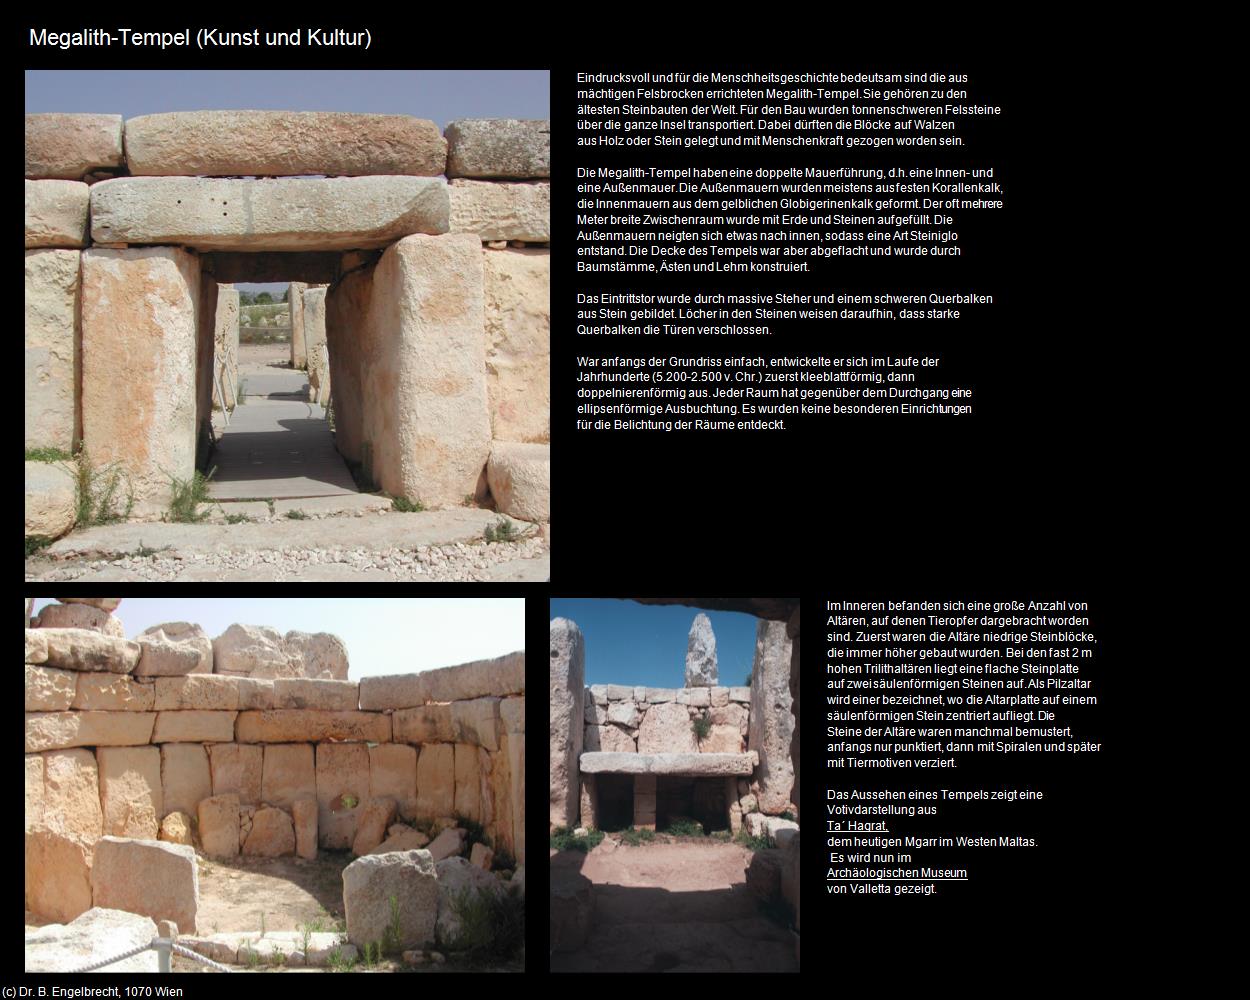 Megalith-Tempel (+Kunst und Kultur) in Malta - Perle im Mittelmeer(c)B.Engelbrecht